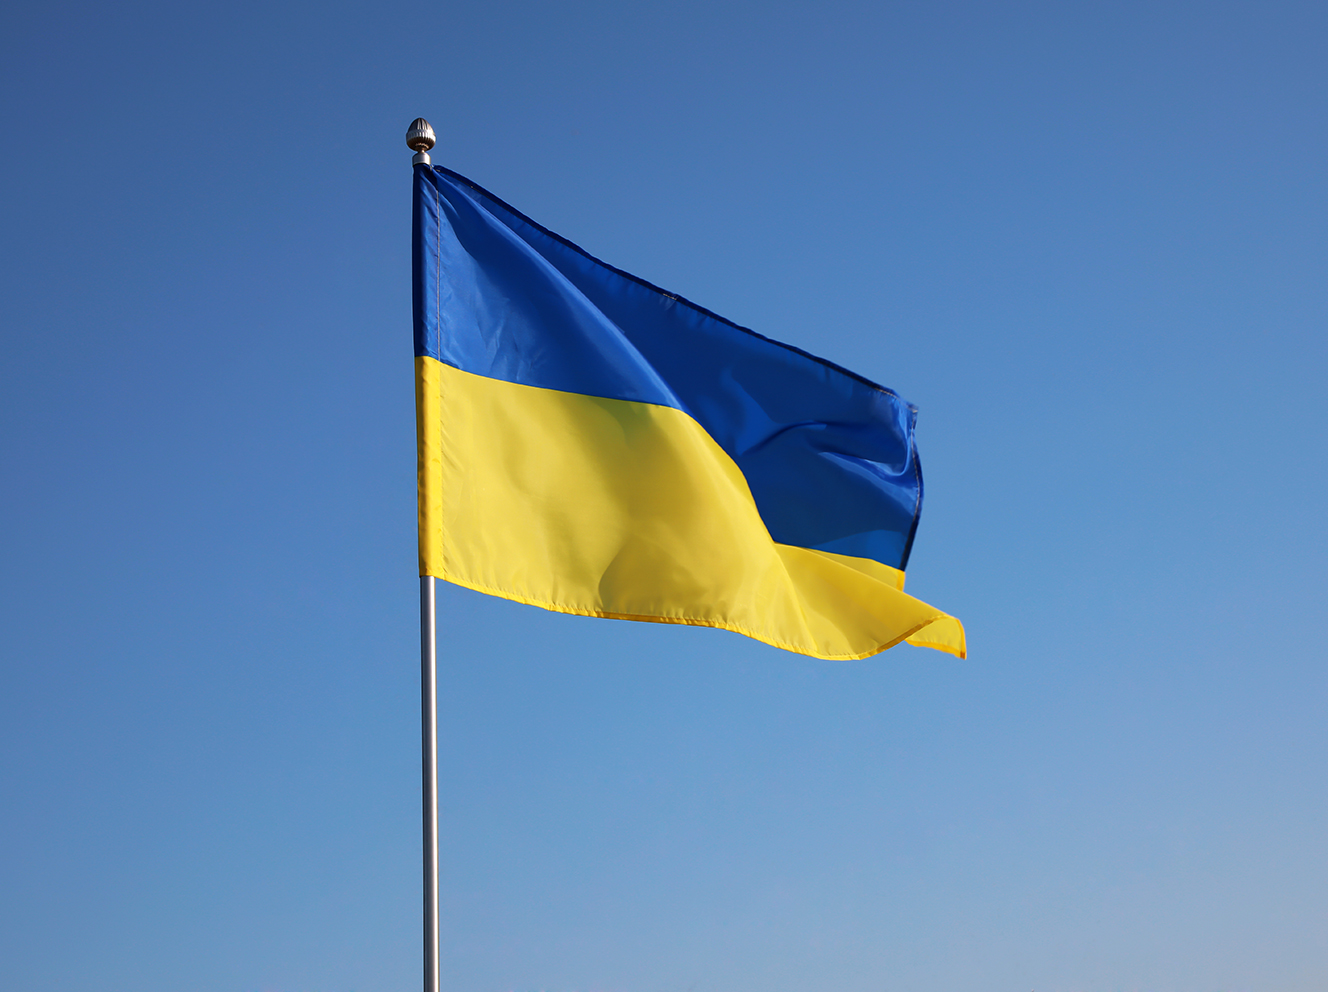 Crisis in Ukraine: Mass General Responds